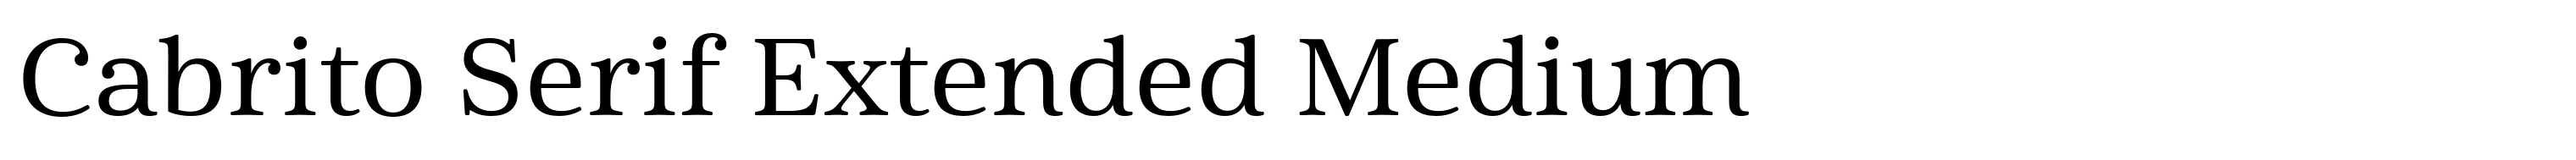 Cabrito Serif Extended Medium